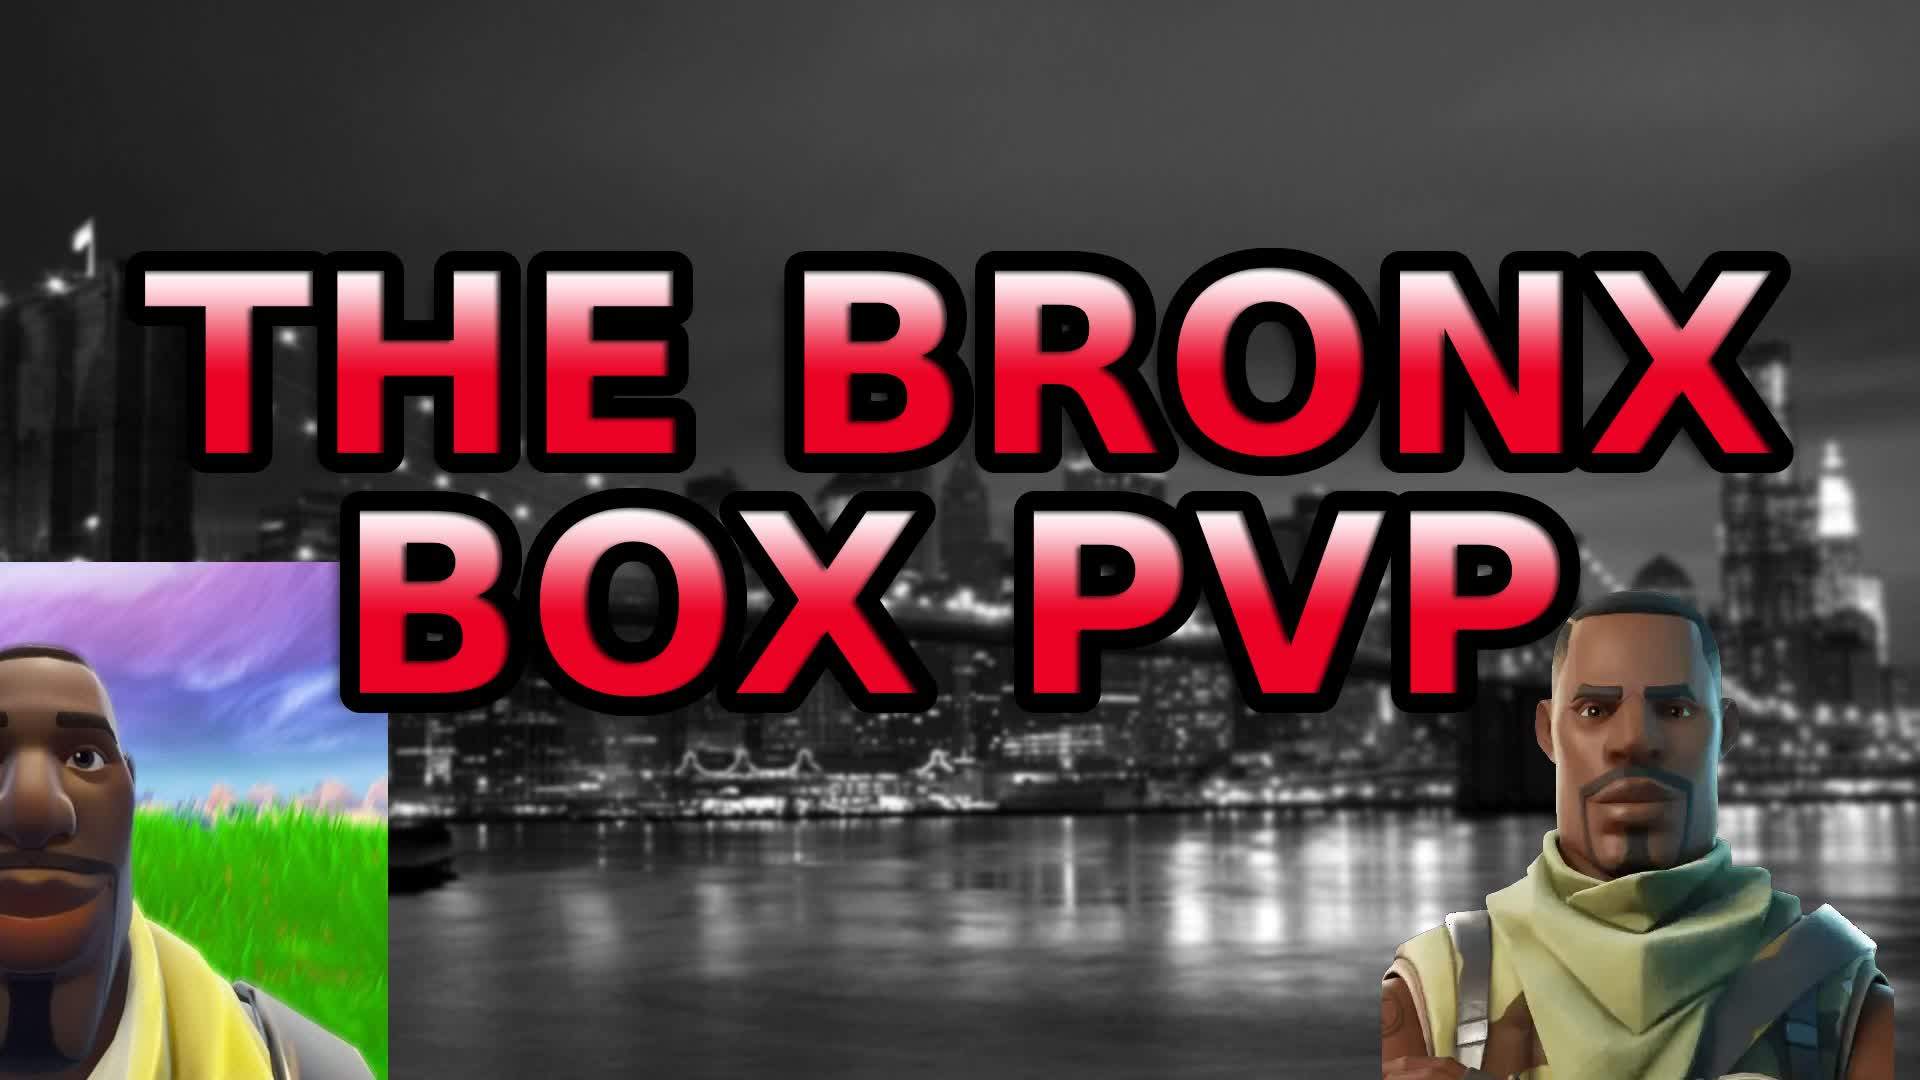 THE BRONX BOX PVP